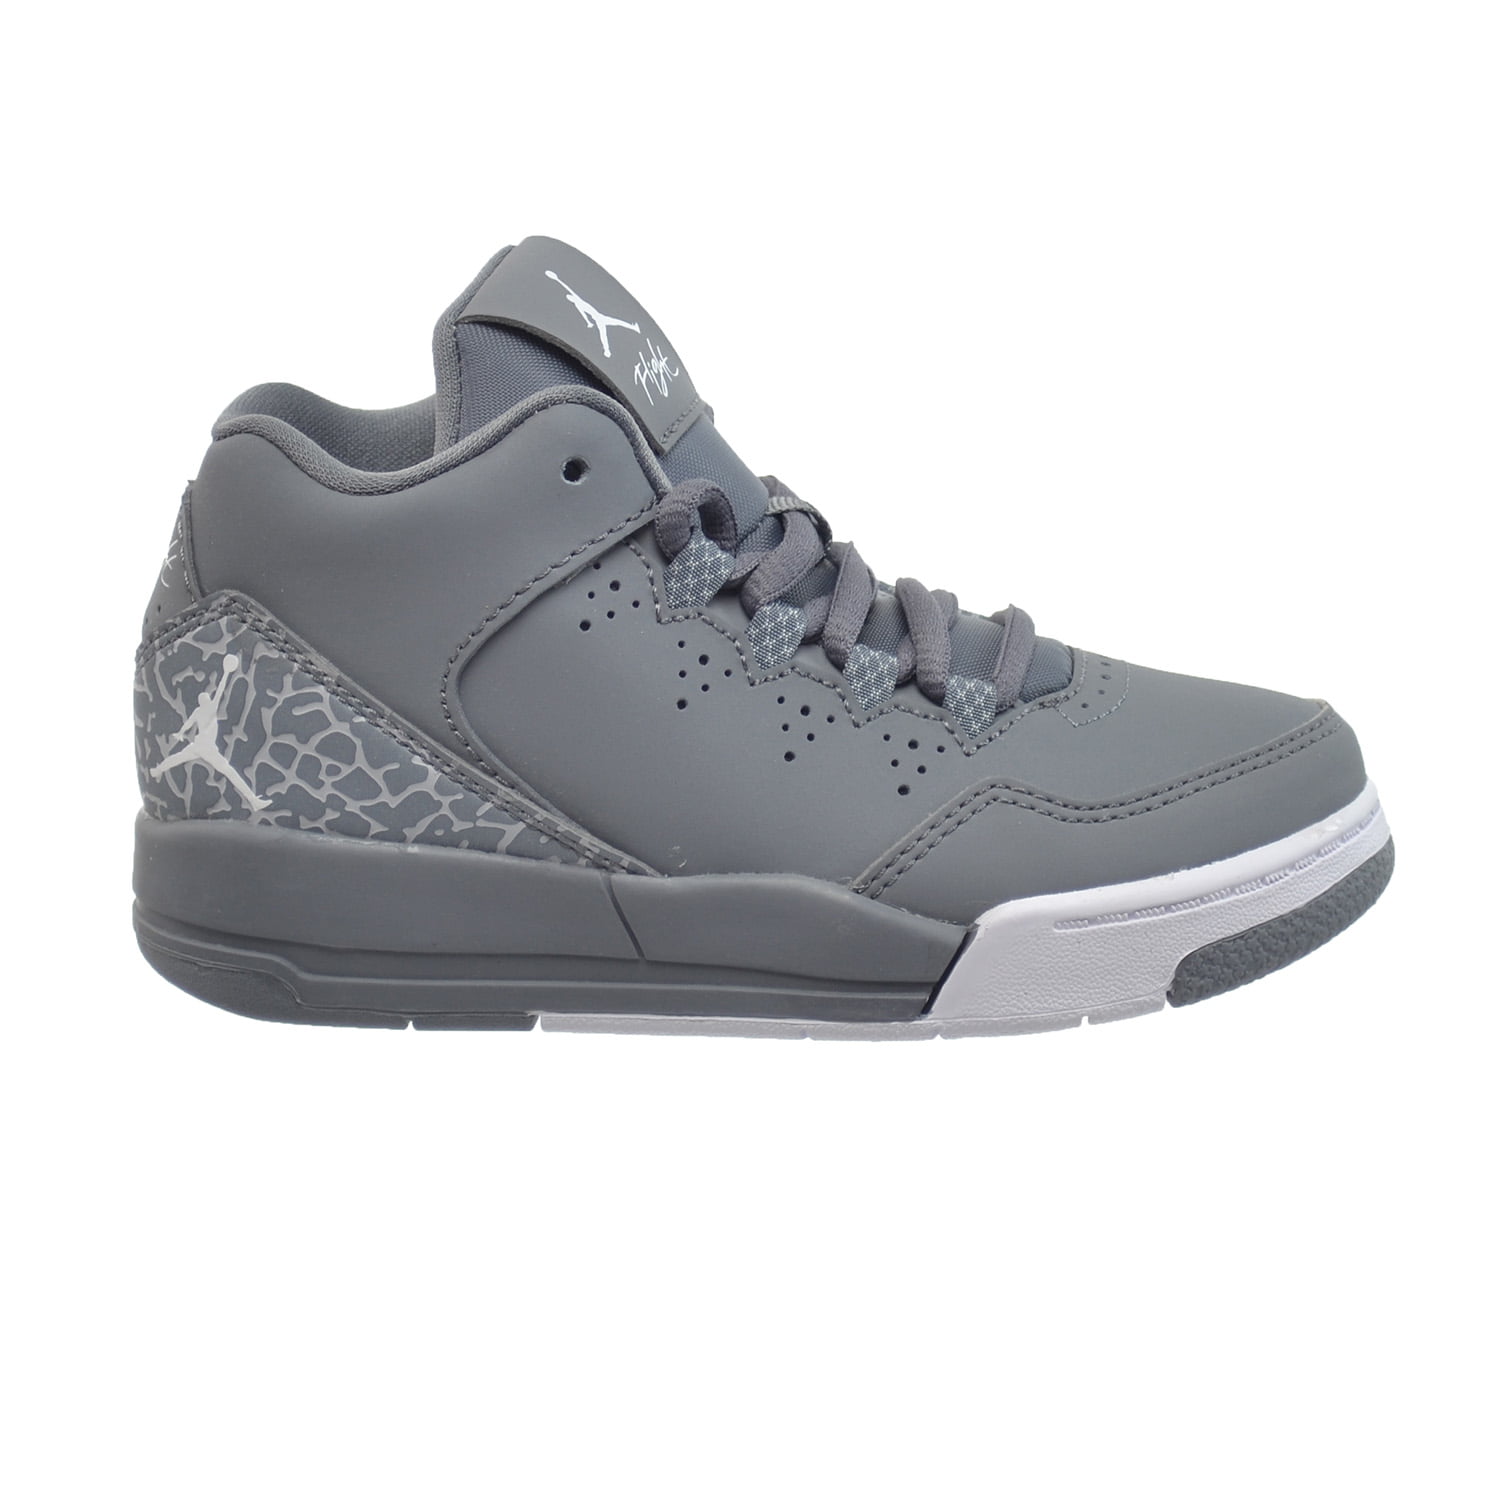 jordan flight shoes grey